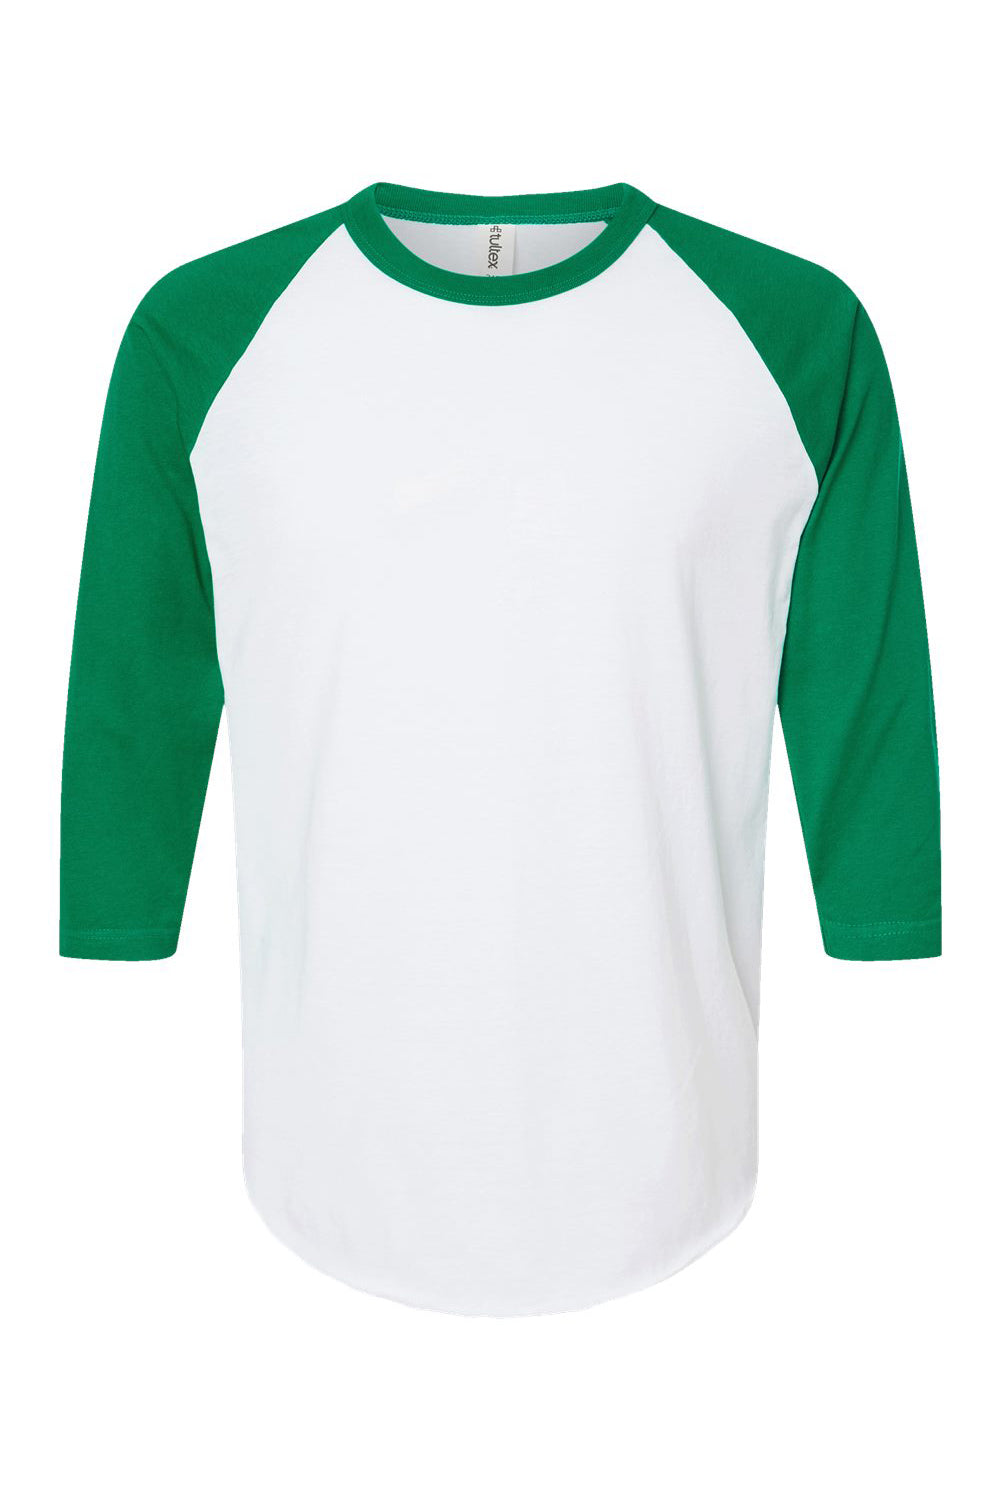 Tultex 245 Mens Fine Jersey Raglan 3/4 Sleeve Crewneck T-Shirt White/Kelly Green Flat Front